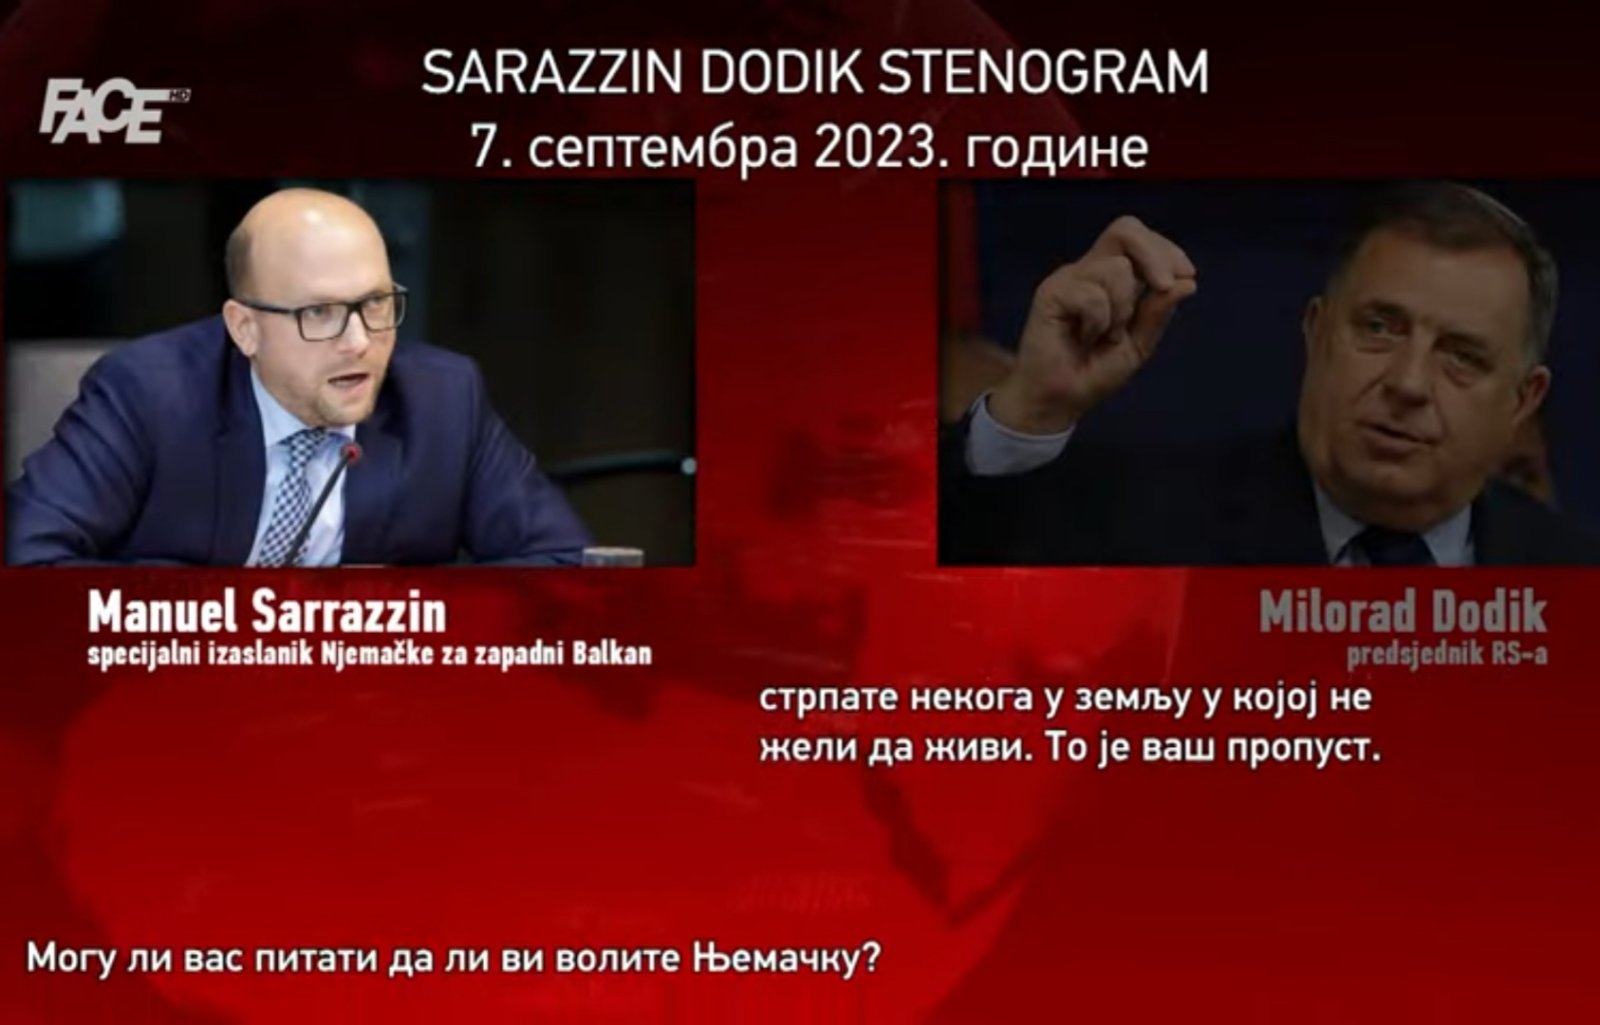 Šokantan transkript razgovora Sarrazin - Dodik: Otcjepljenje, valuta, prijetnje …